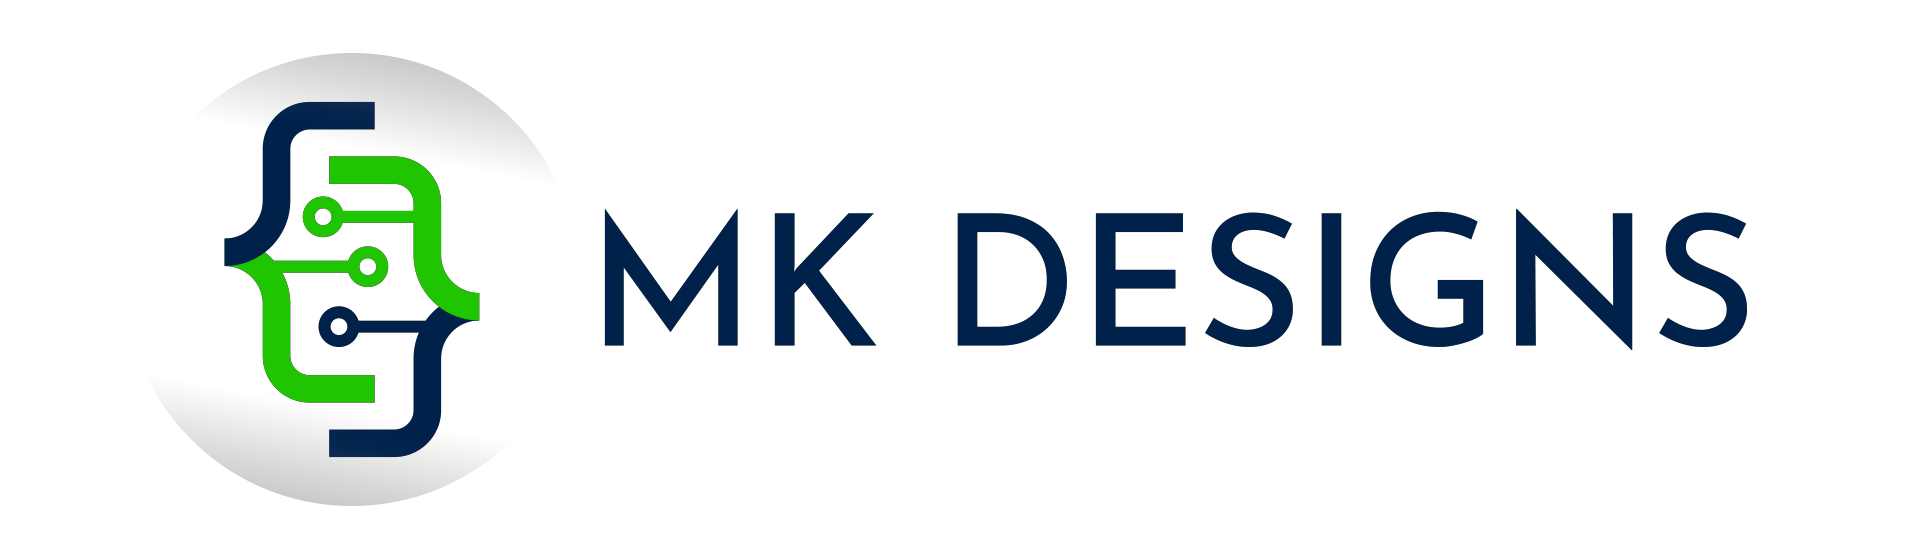 MK Designs